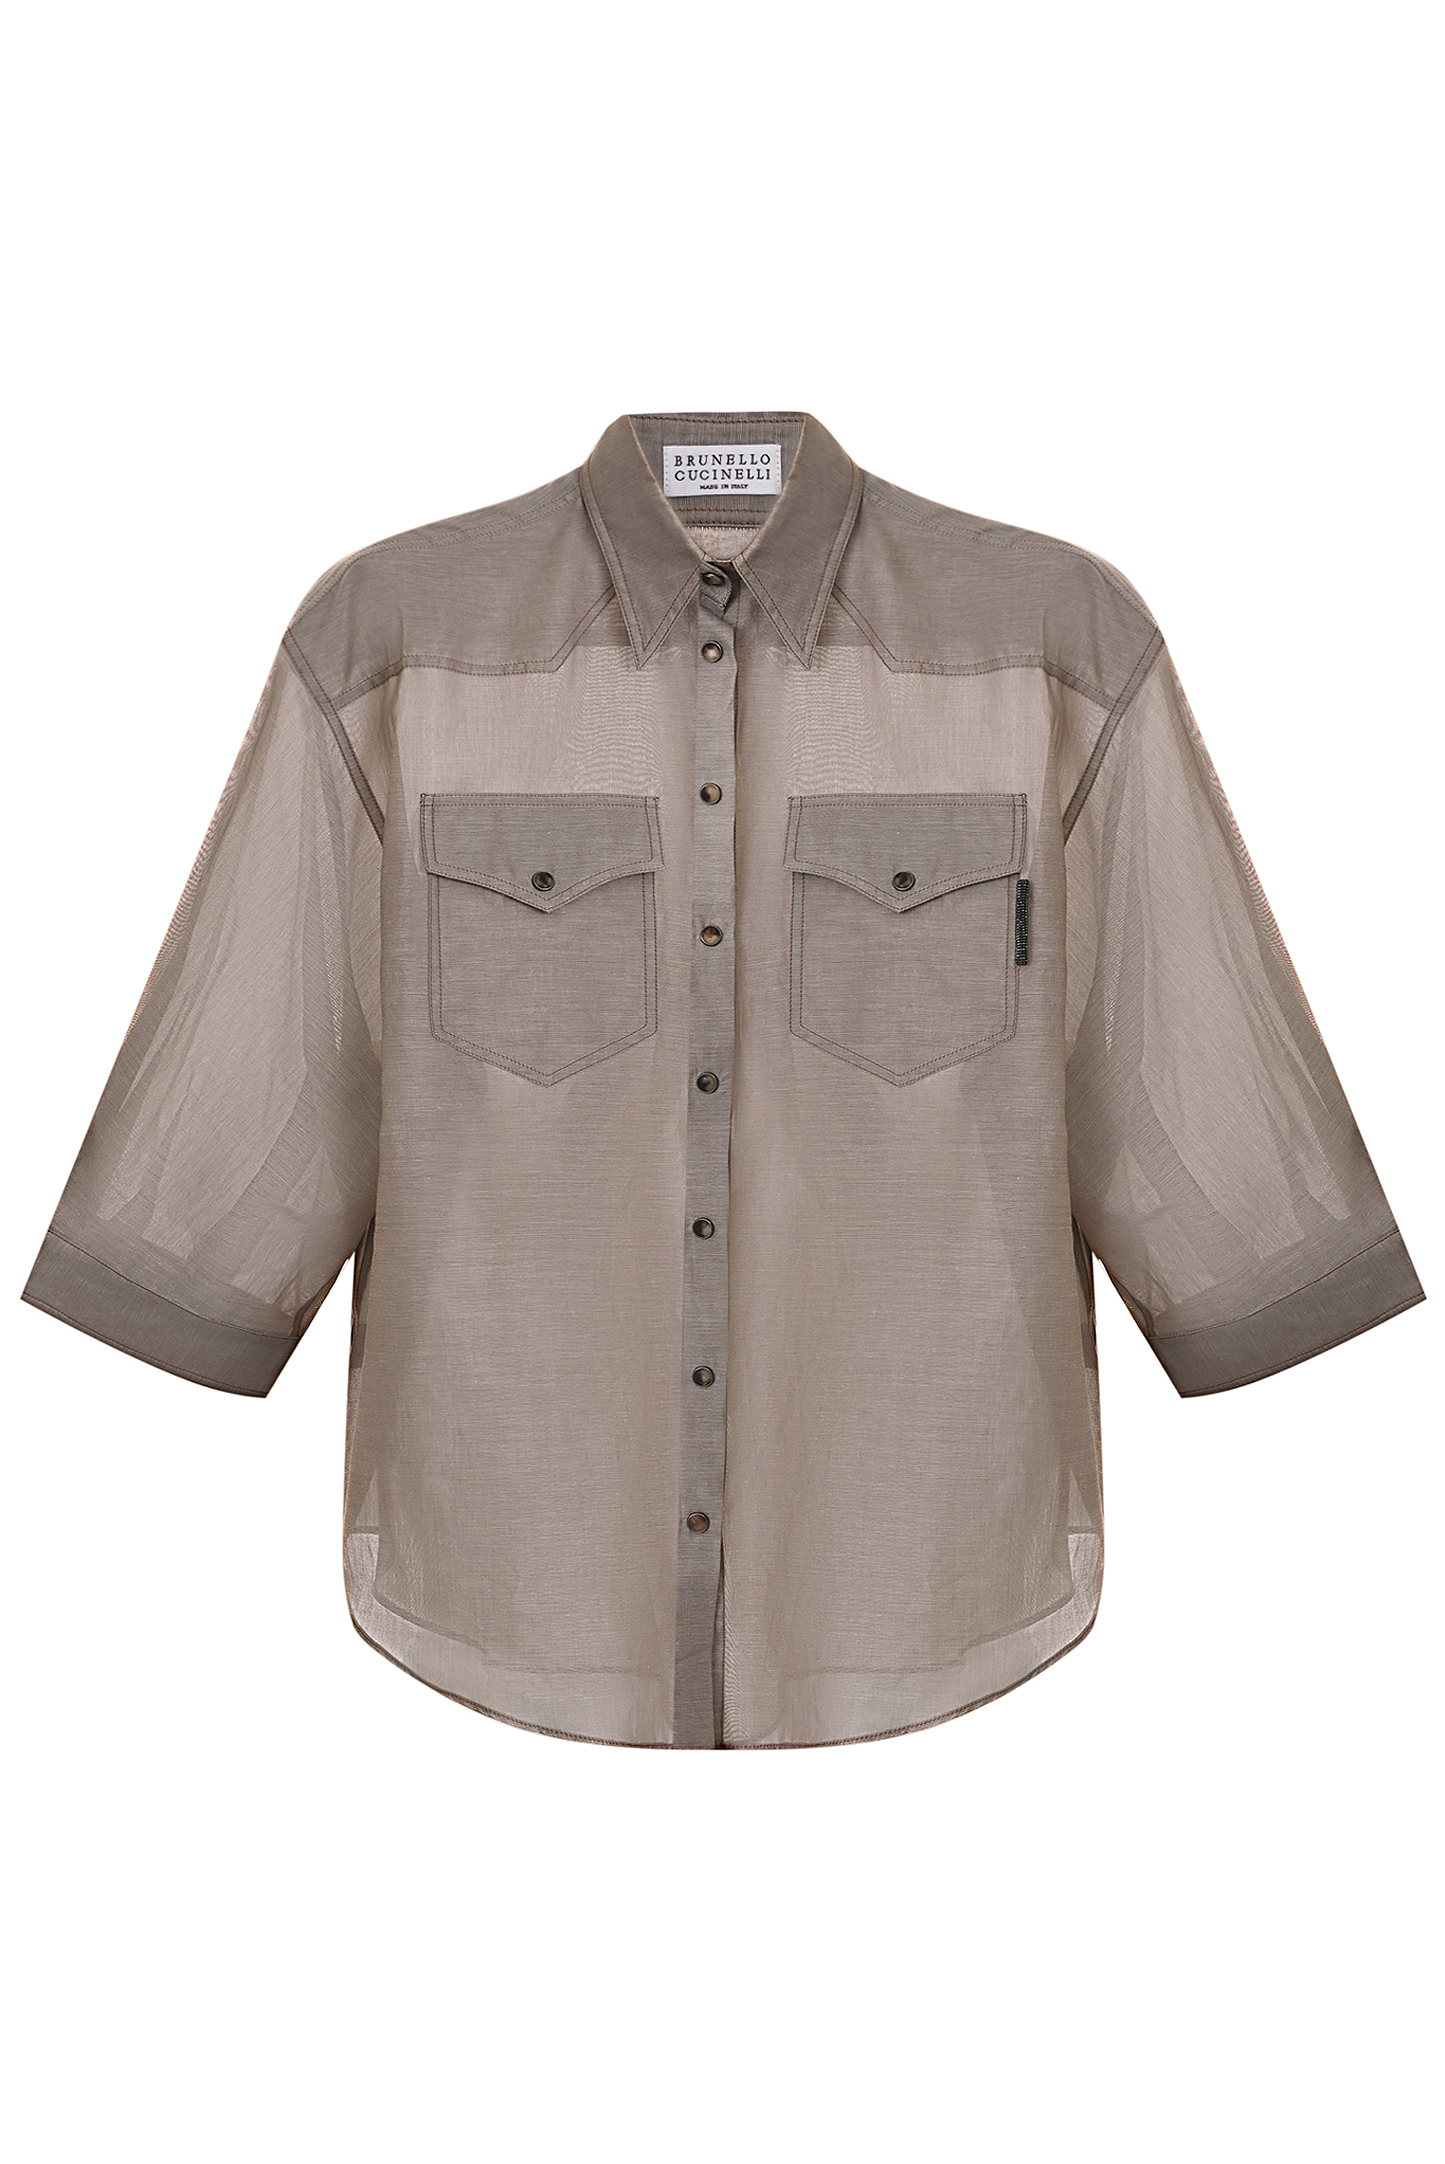 Рубашка (Блуза) BRUNELLO  CUCINELLI MH794MF117, цвет: Серый, Женский